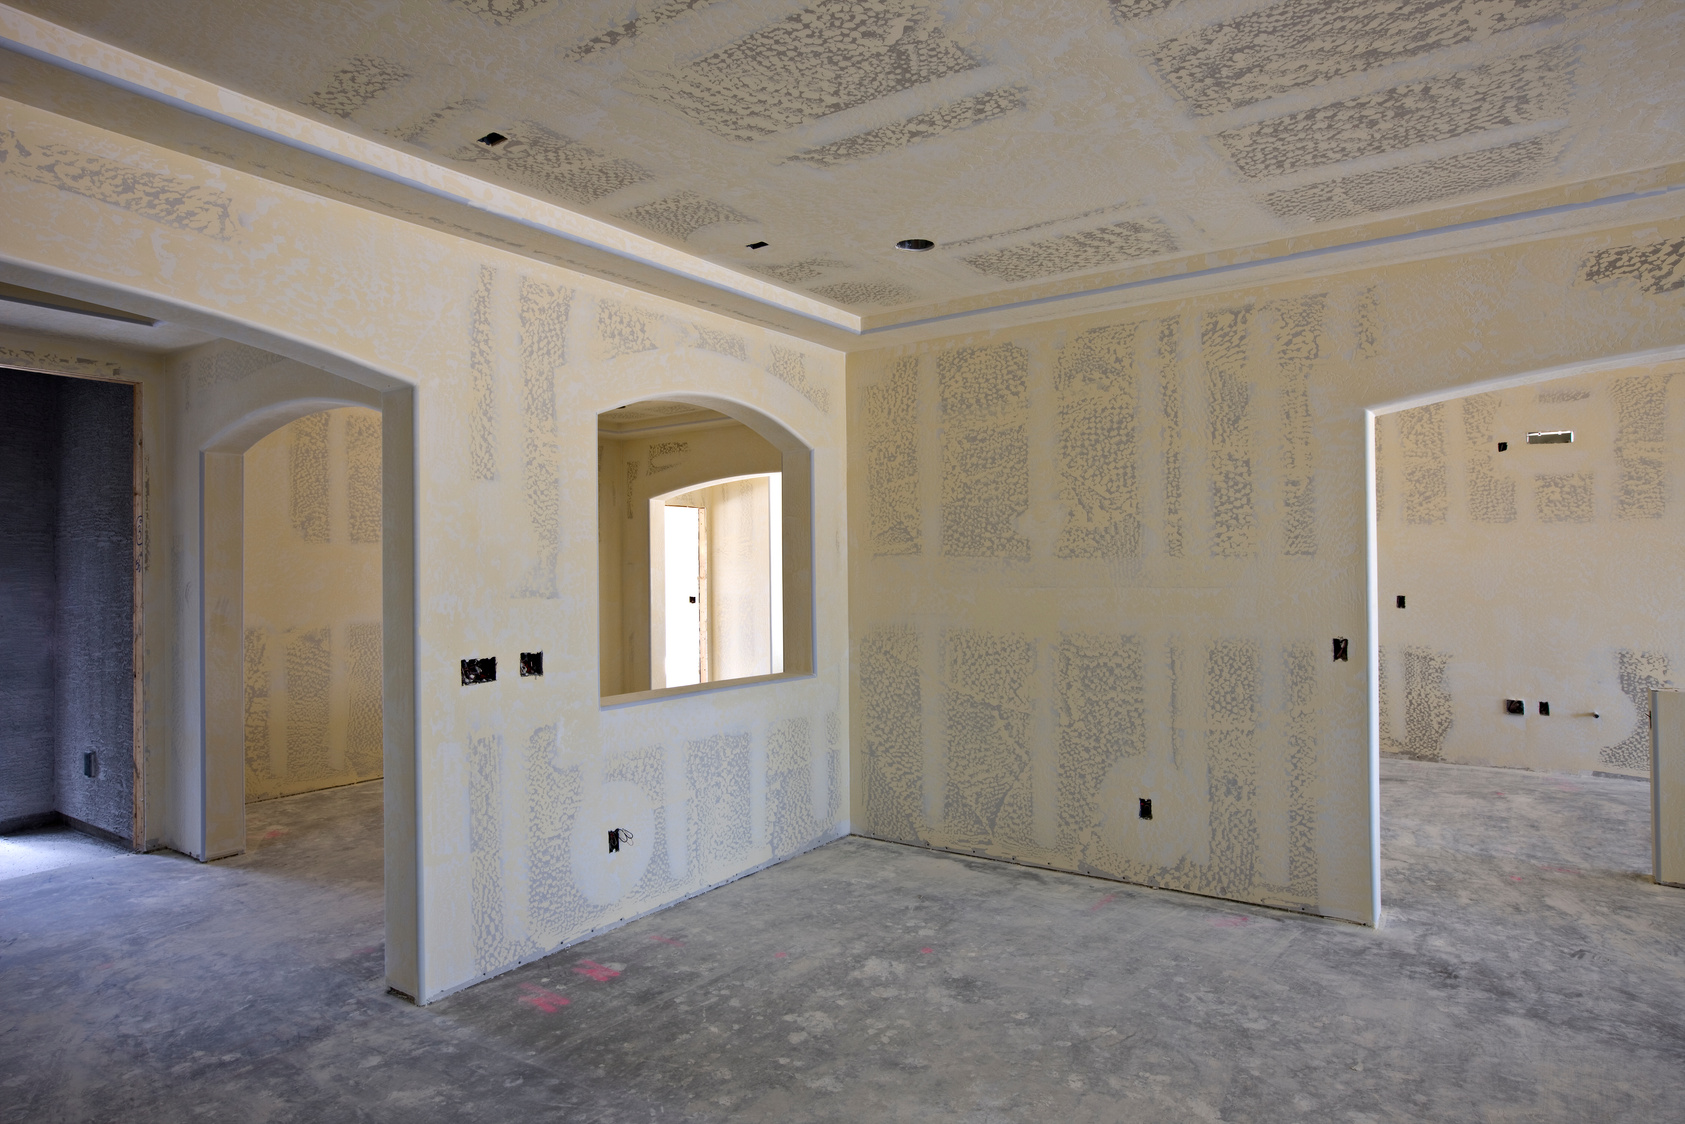 New Construction Interior Drywall